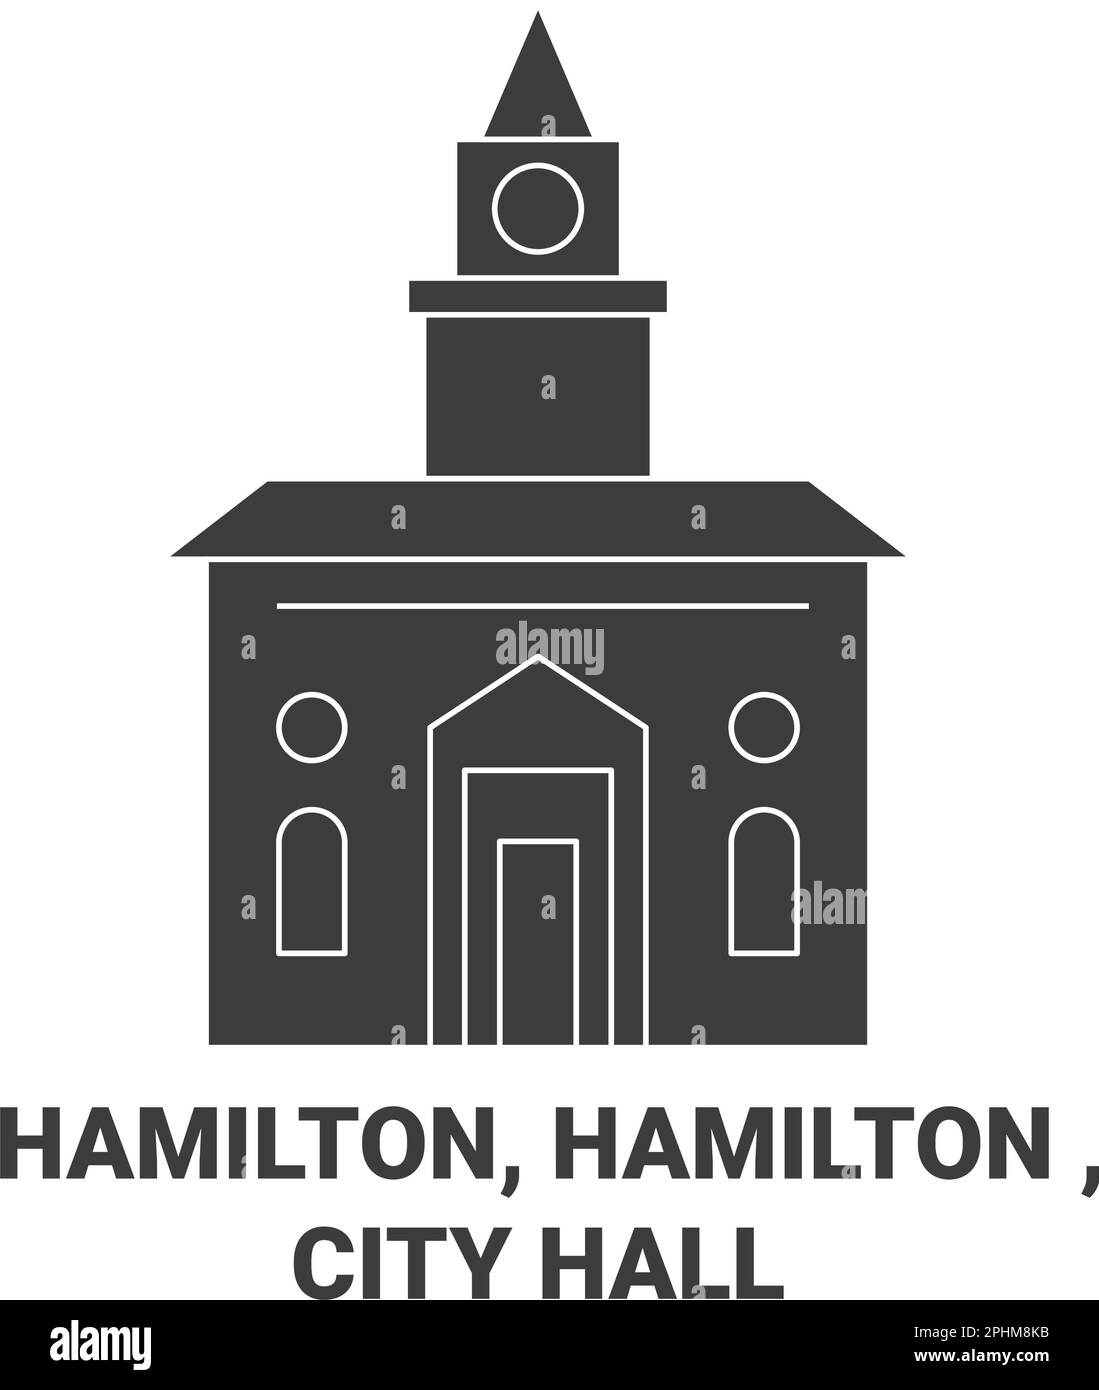 Kanada, Hamilton, Hamilton, City Hall Reise Landmark Vector Illustration Stock Vektor